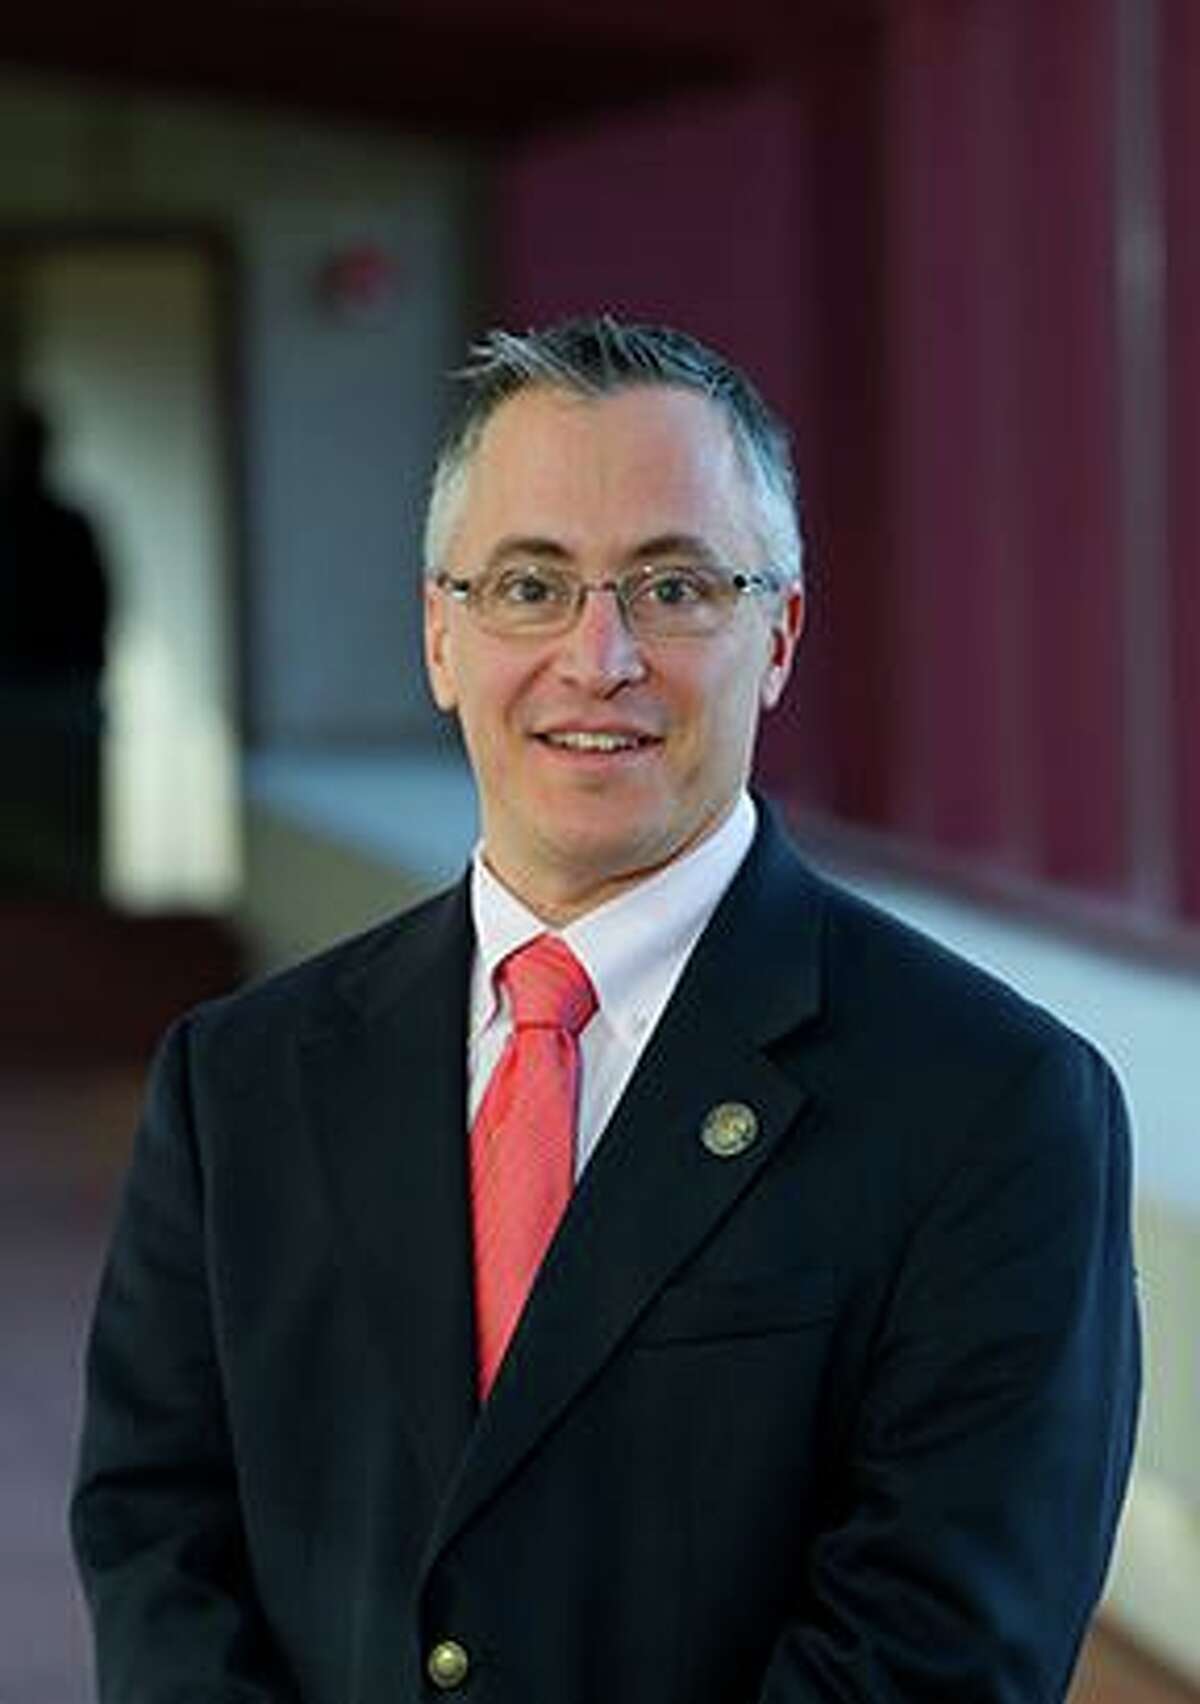 State Rep. Vincent Candelora, R-North Branford